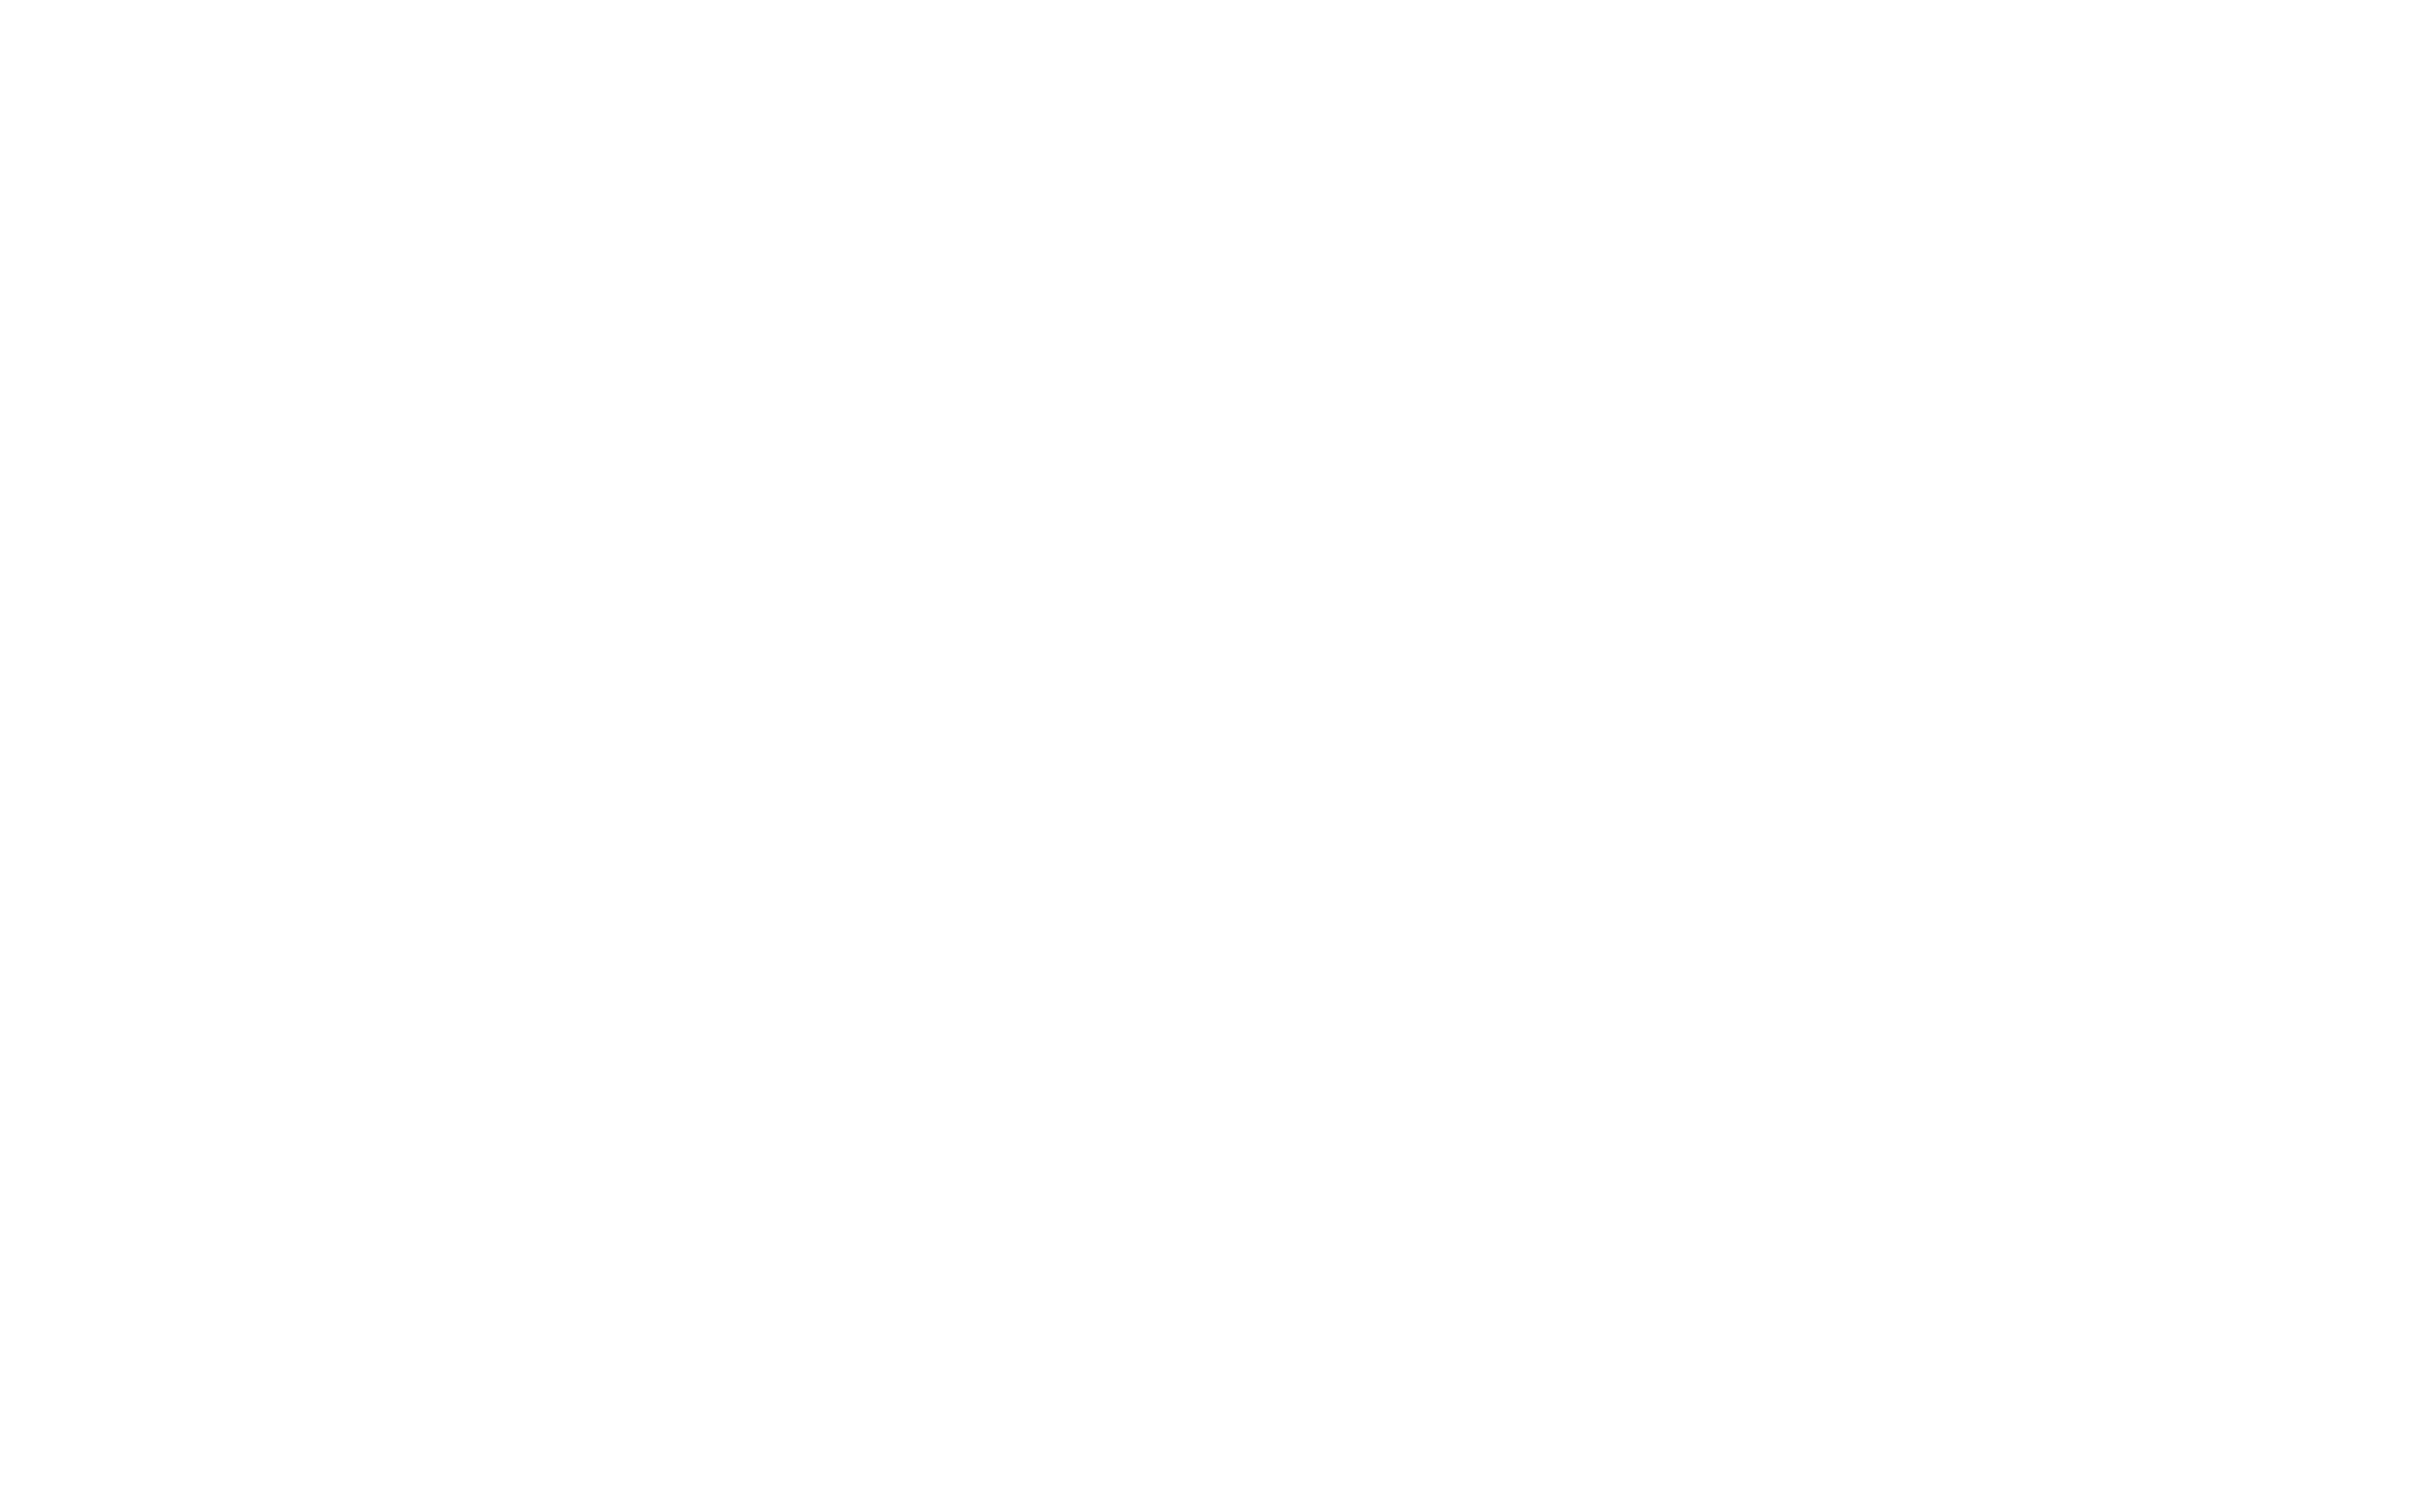 Berlinale 2022